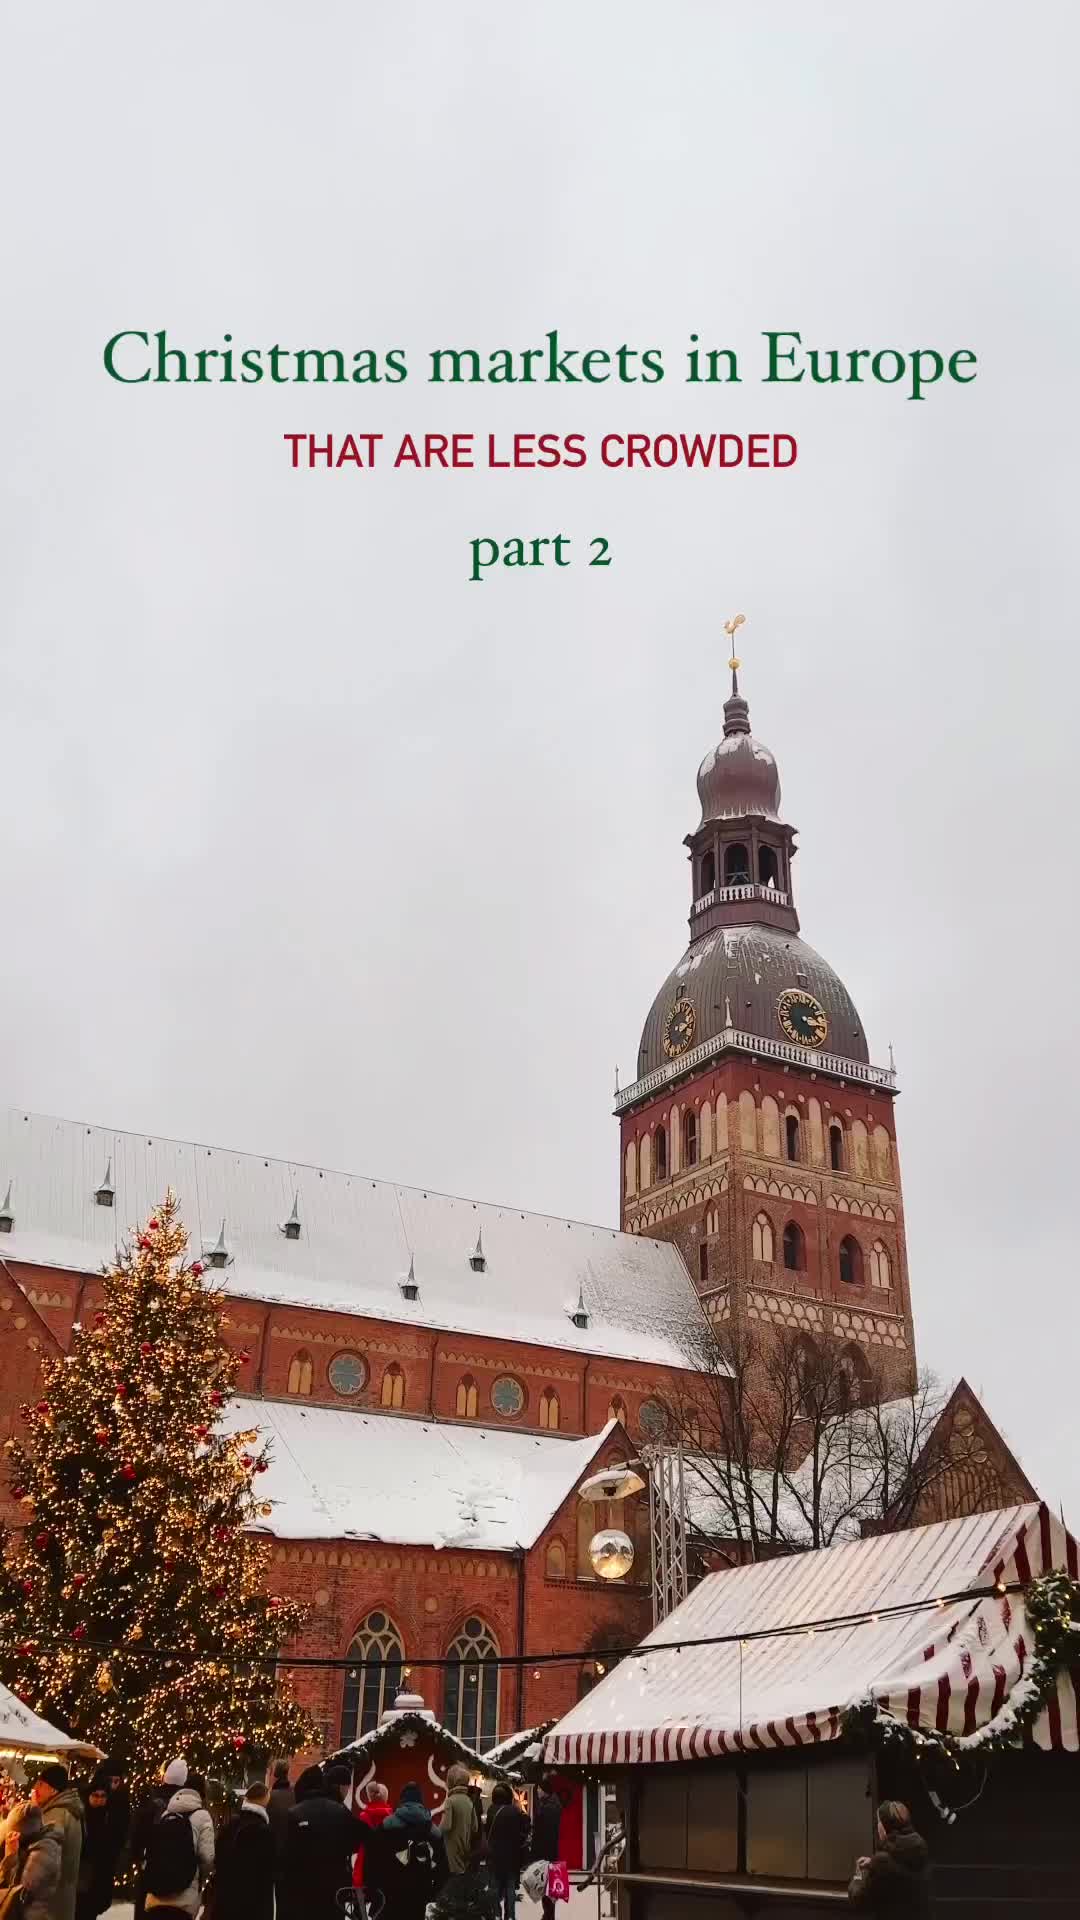 Riga Christmas Market: A Hidden Gem for Mulled Wine Lovers